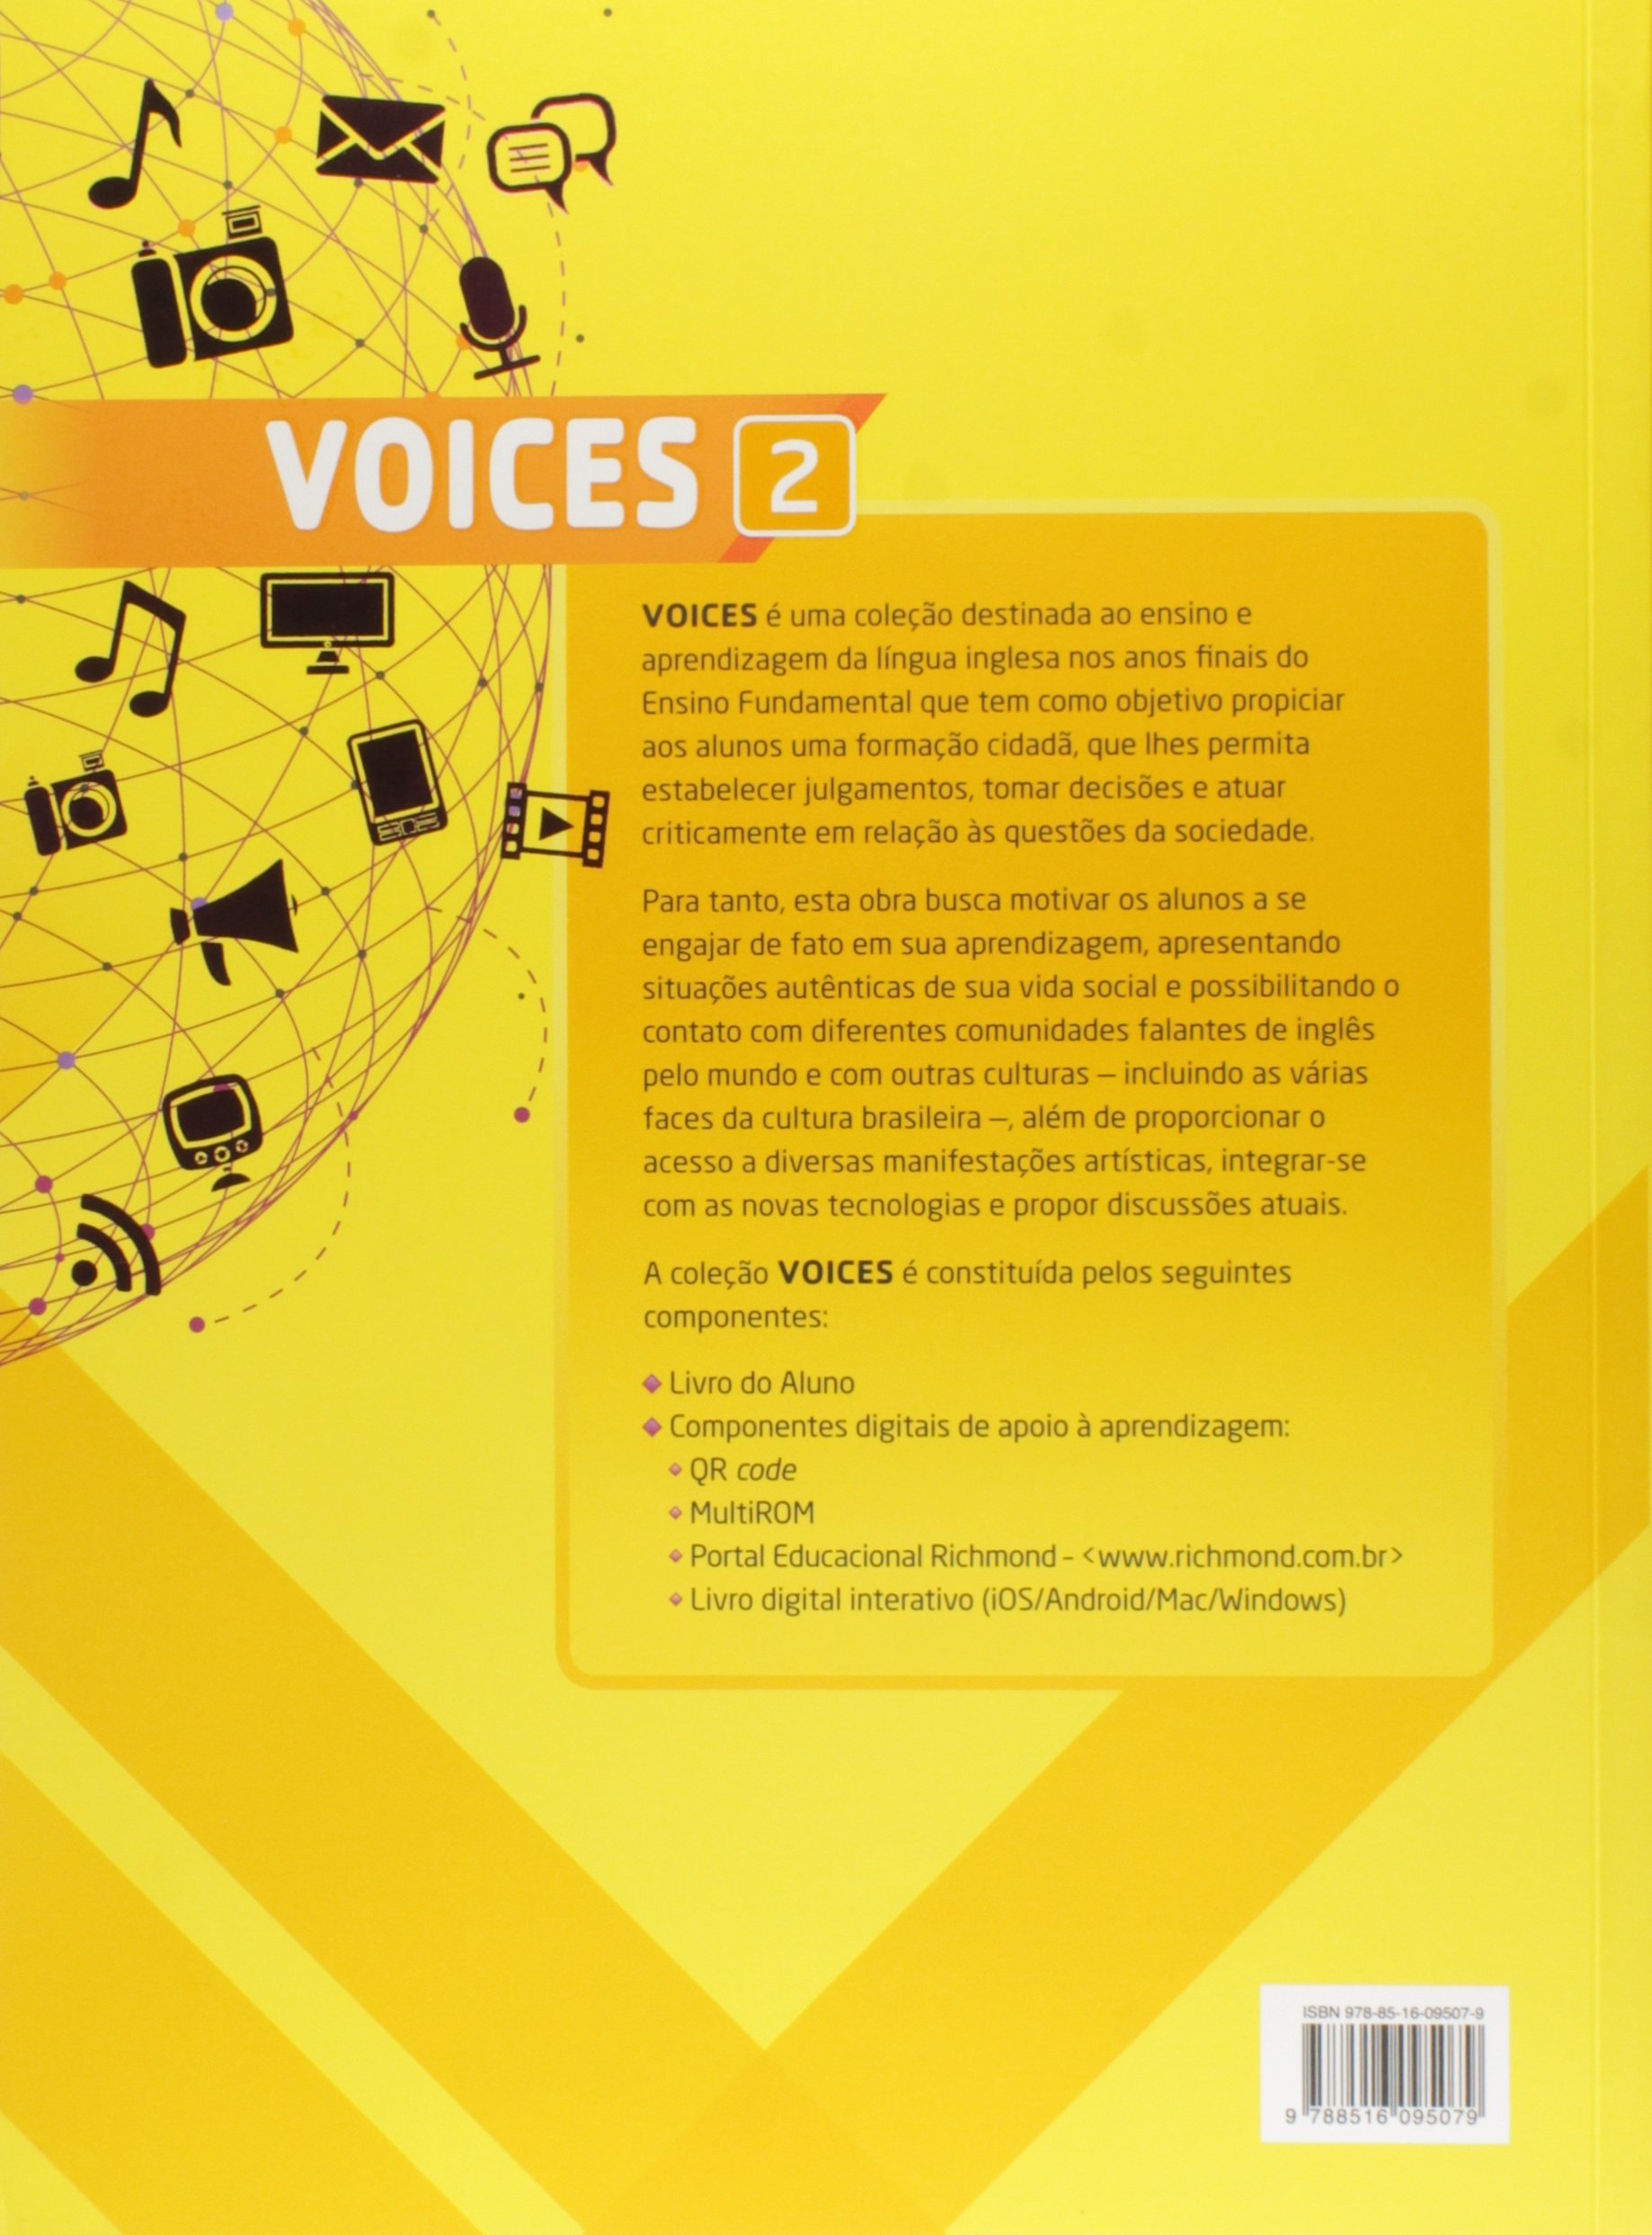 Voices 2 Rogerio Tilio